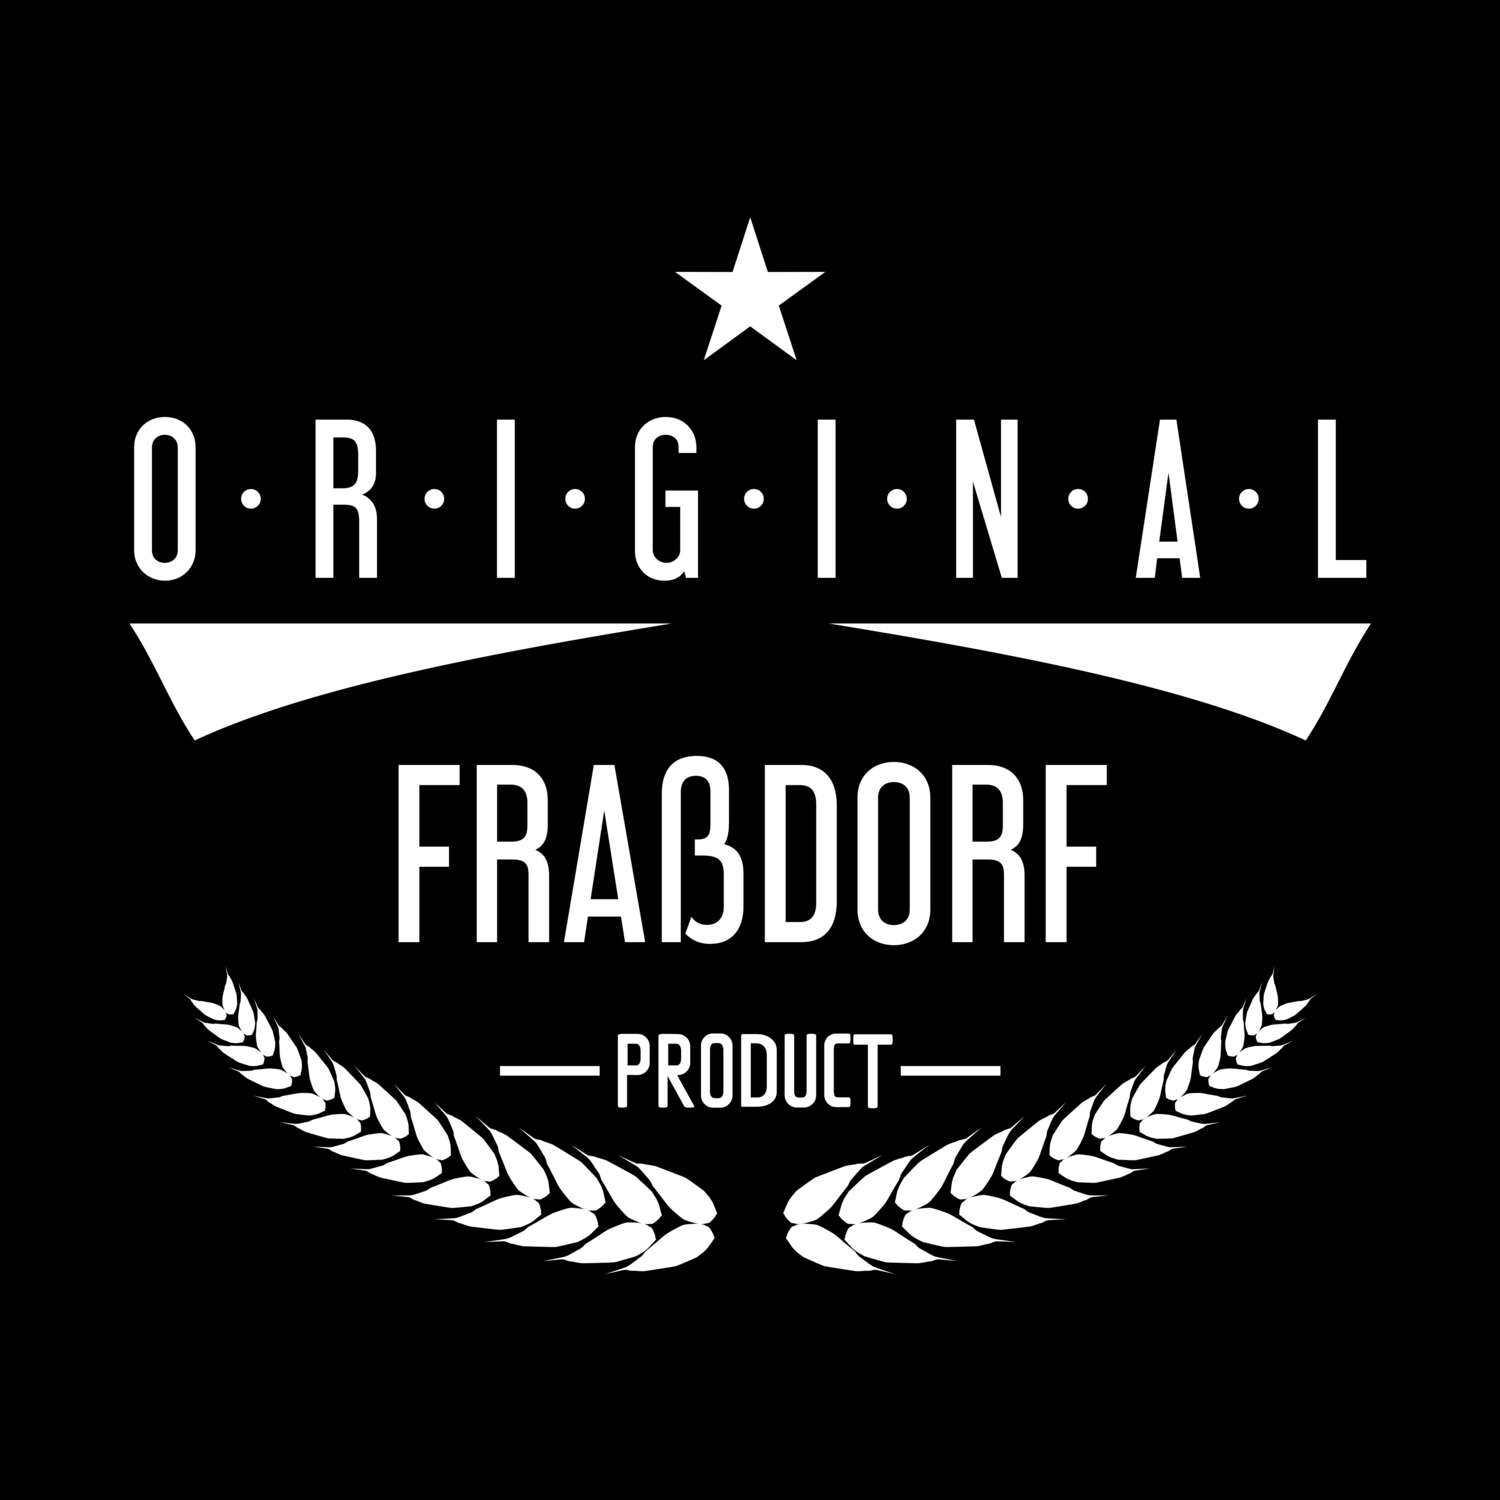 Fraßdorf T-Shirt »Original Product«